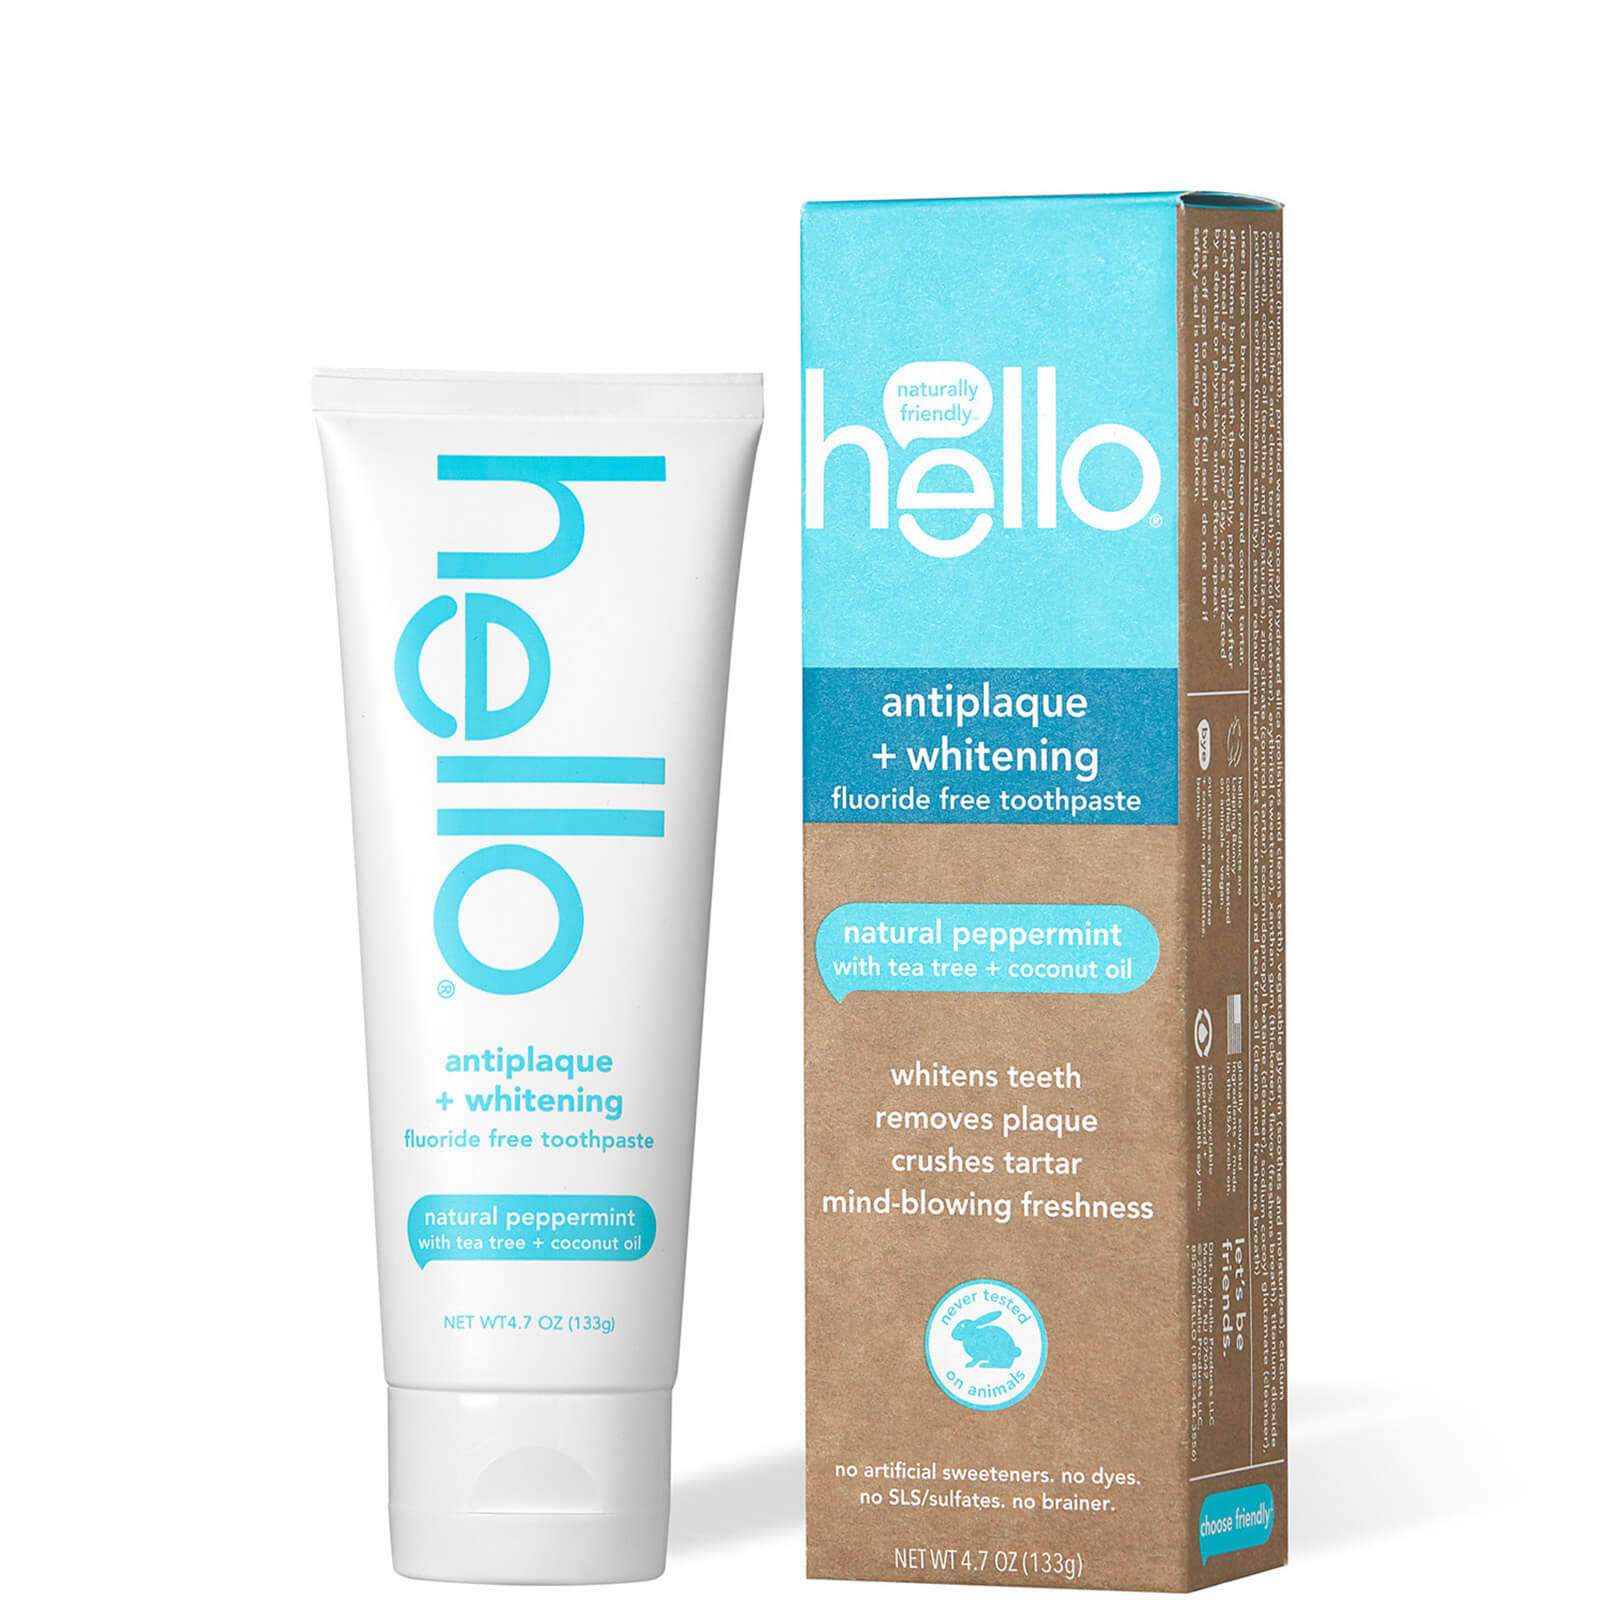 Hello Fluoride Free Antiplaque Whitening Toothpaste - 133g